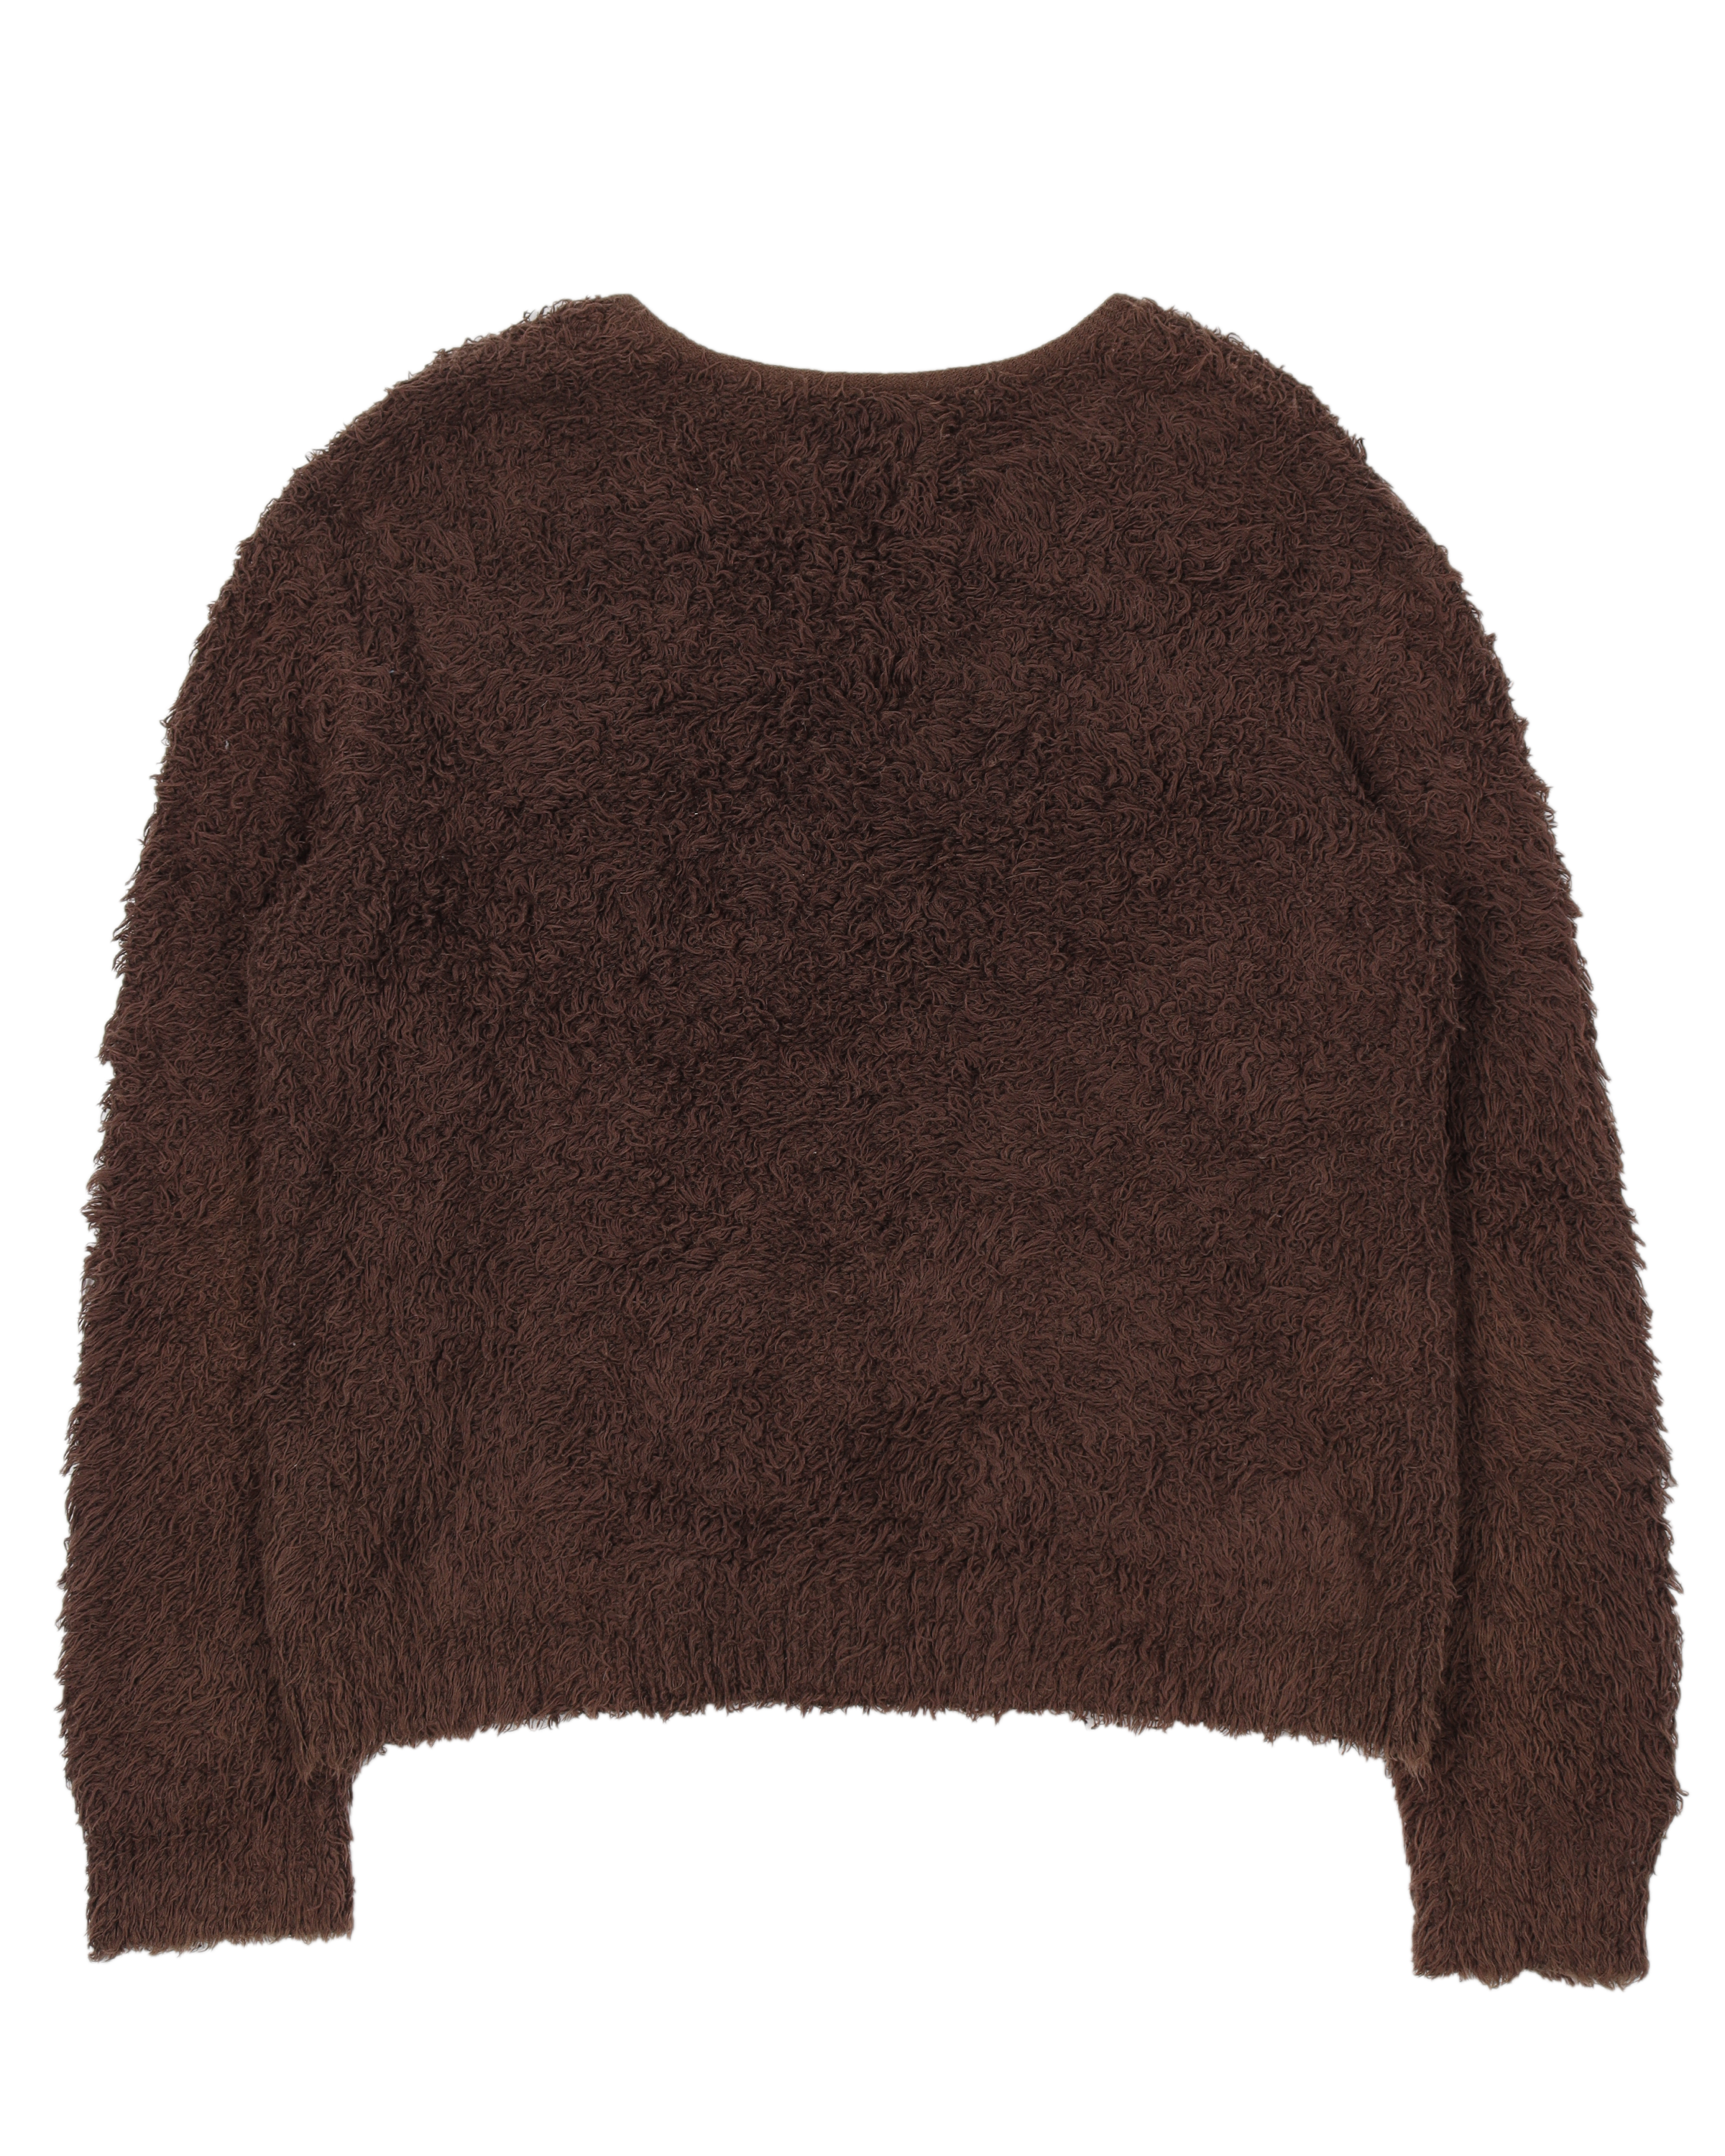 AW03 "Touch Me I'm Sick" Alpaca Knit Sweater